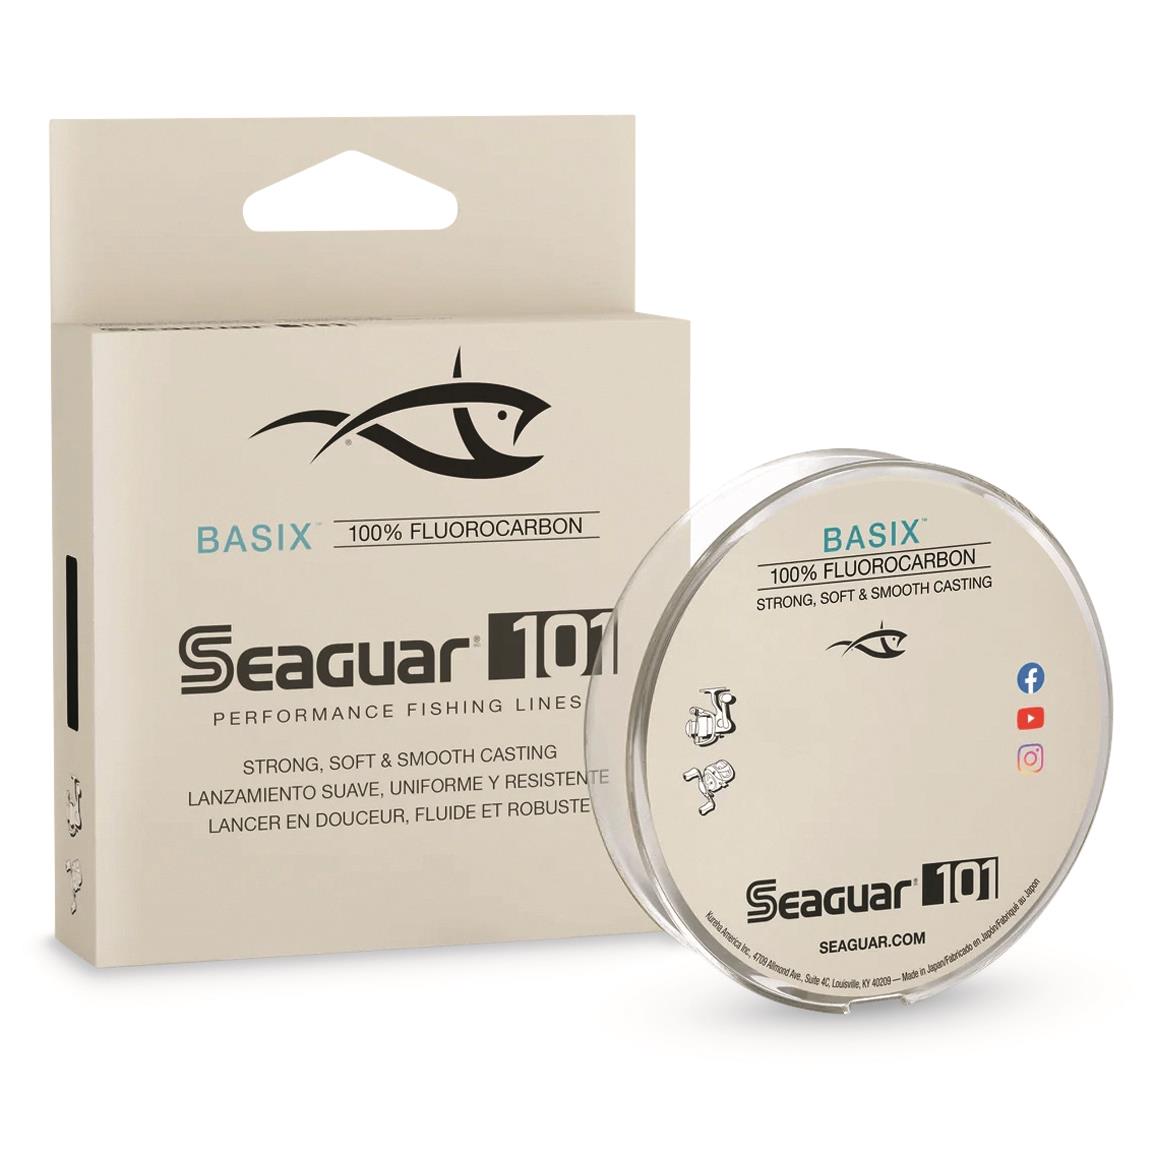 Seaguar BasiX 101 Fluorocarbon Fishing Line, 200 Yards